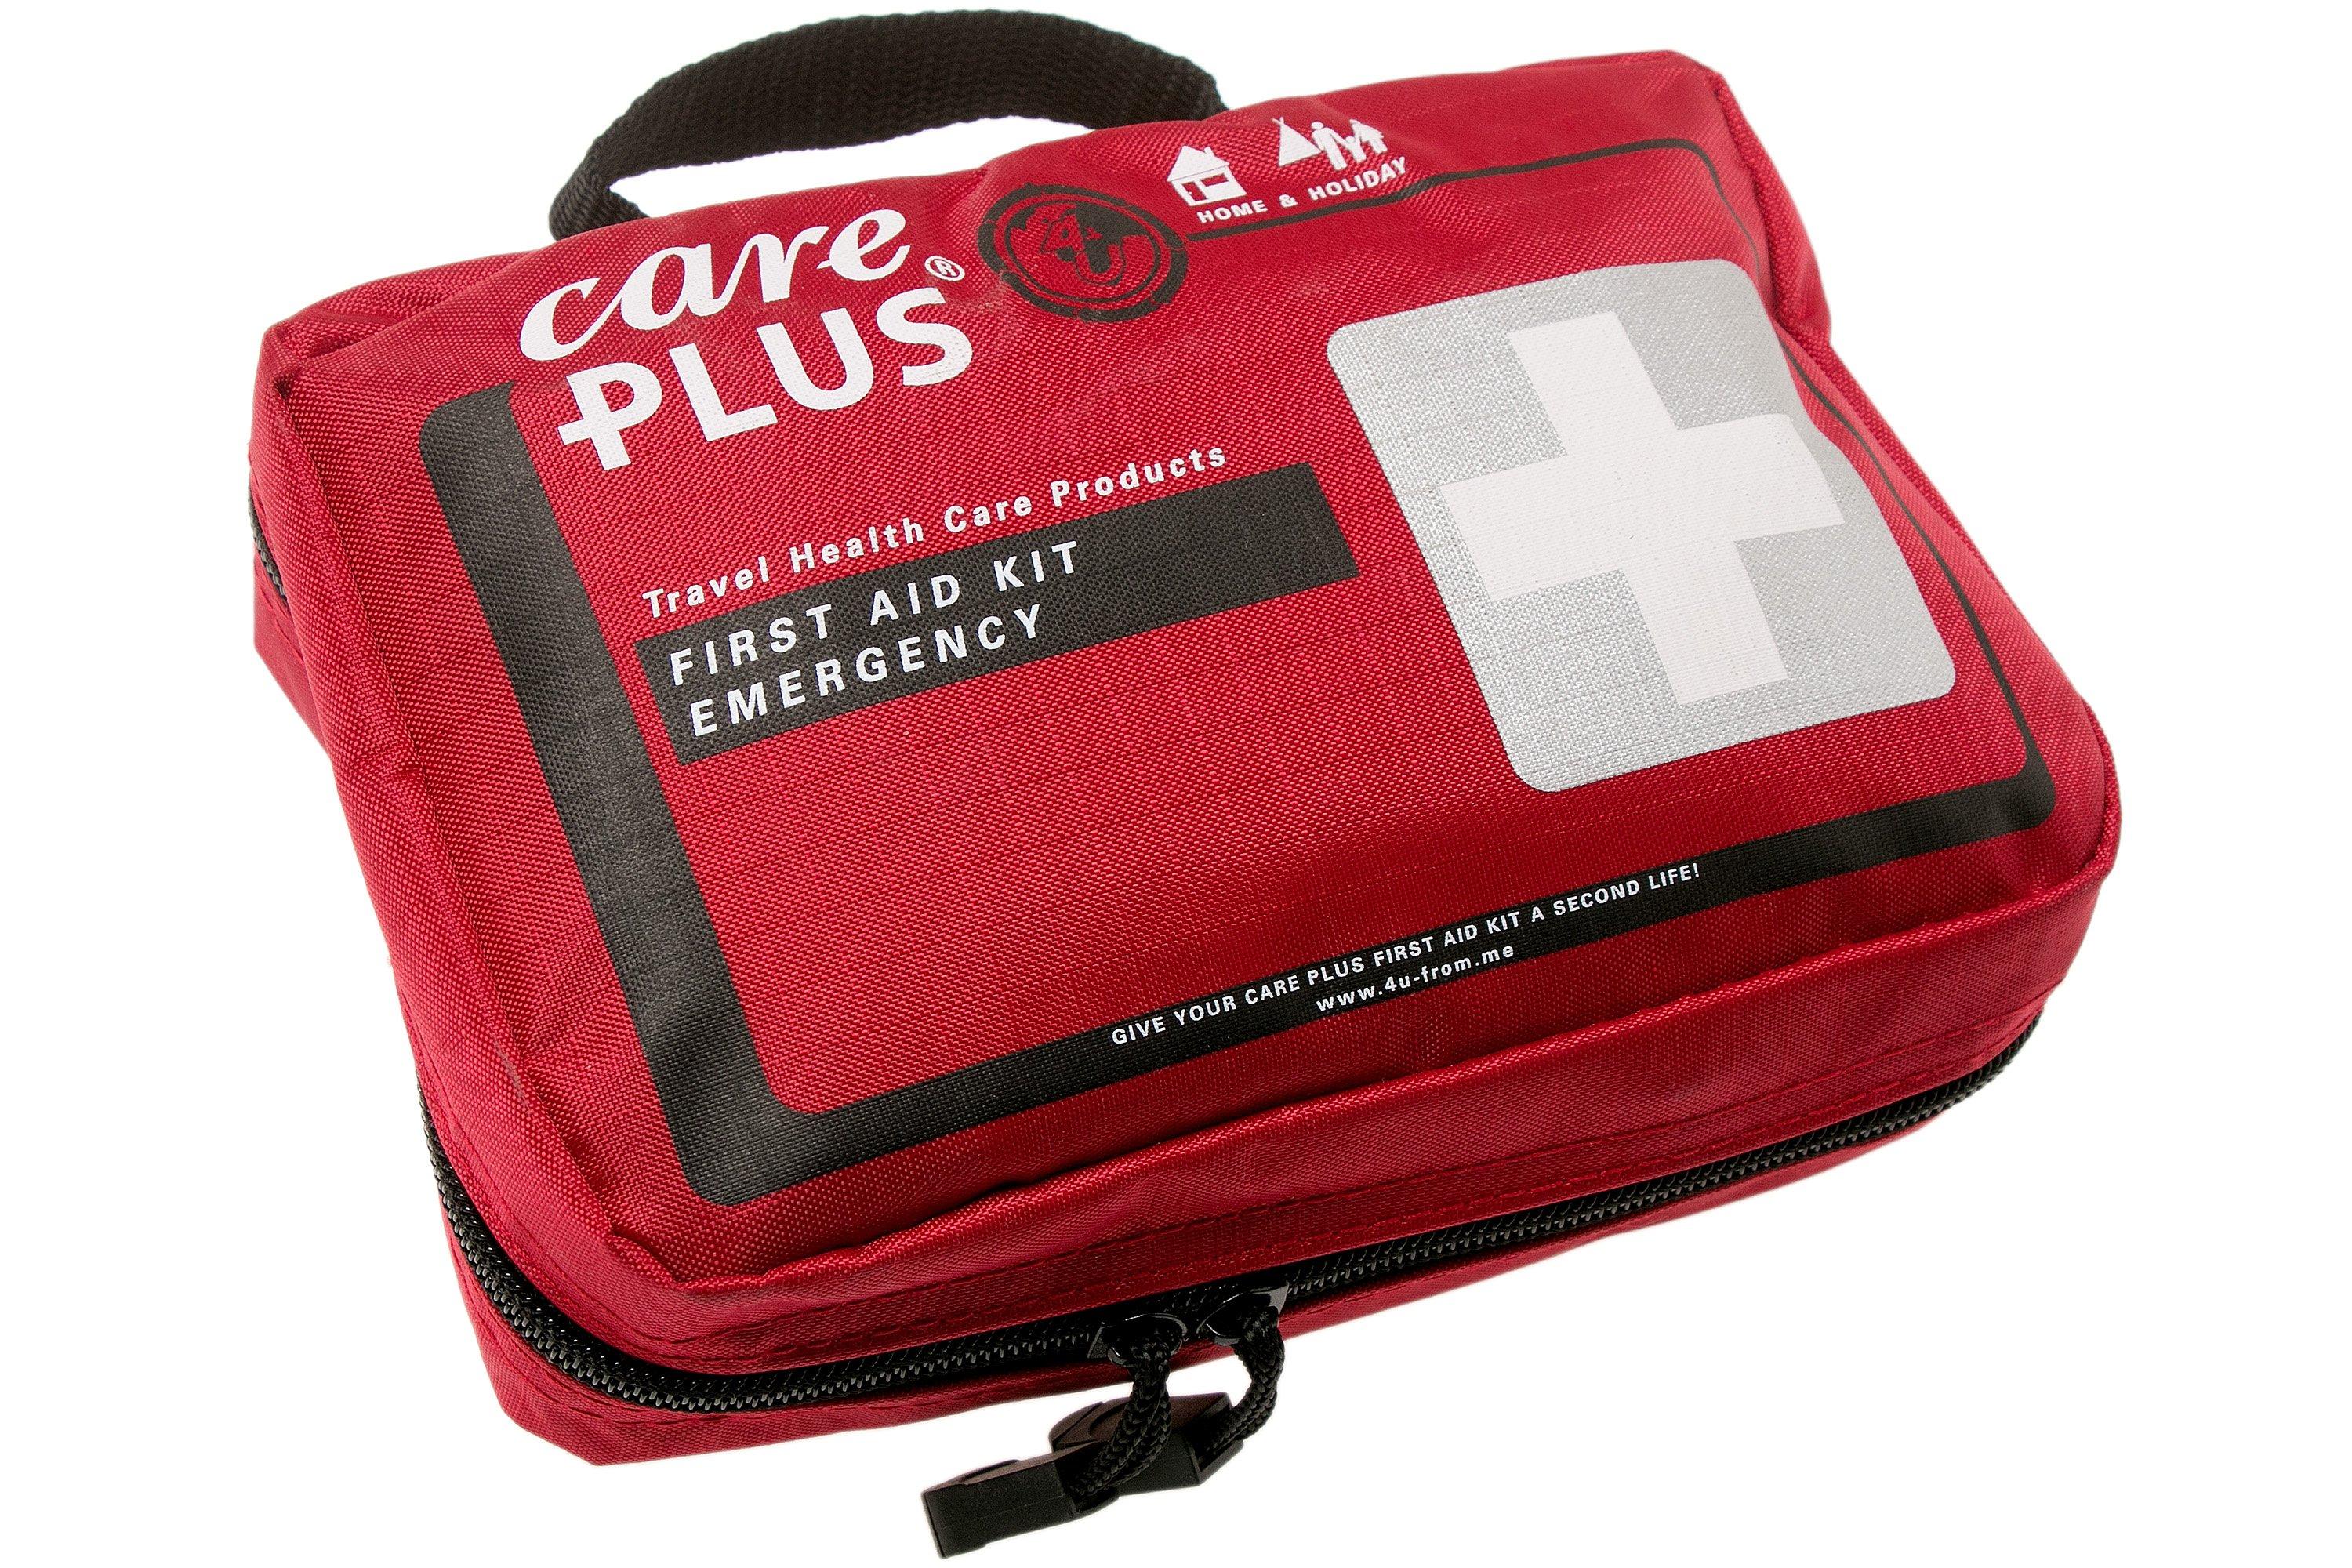 verbinding verbroken Ik was verrast Bestaan Care Plus First Aid Kit Emergency, uitgebreide EHBO-kit | Voordelig kopen  bij knivesandtools.be